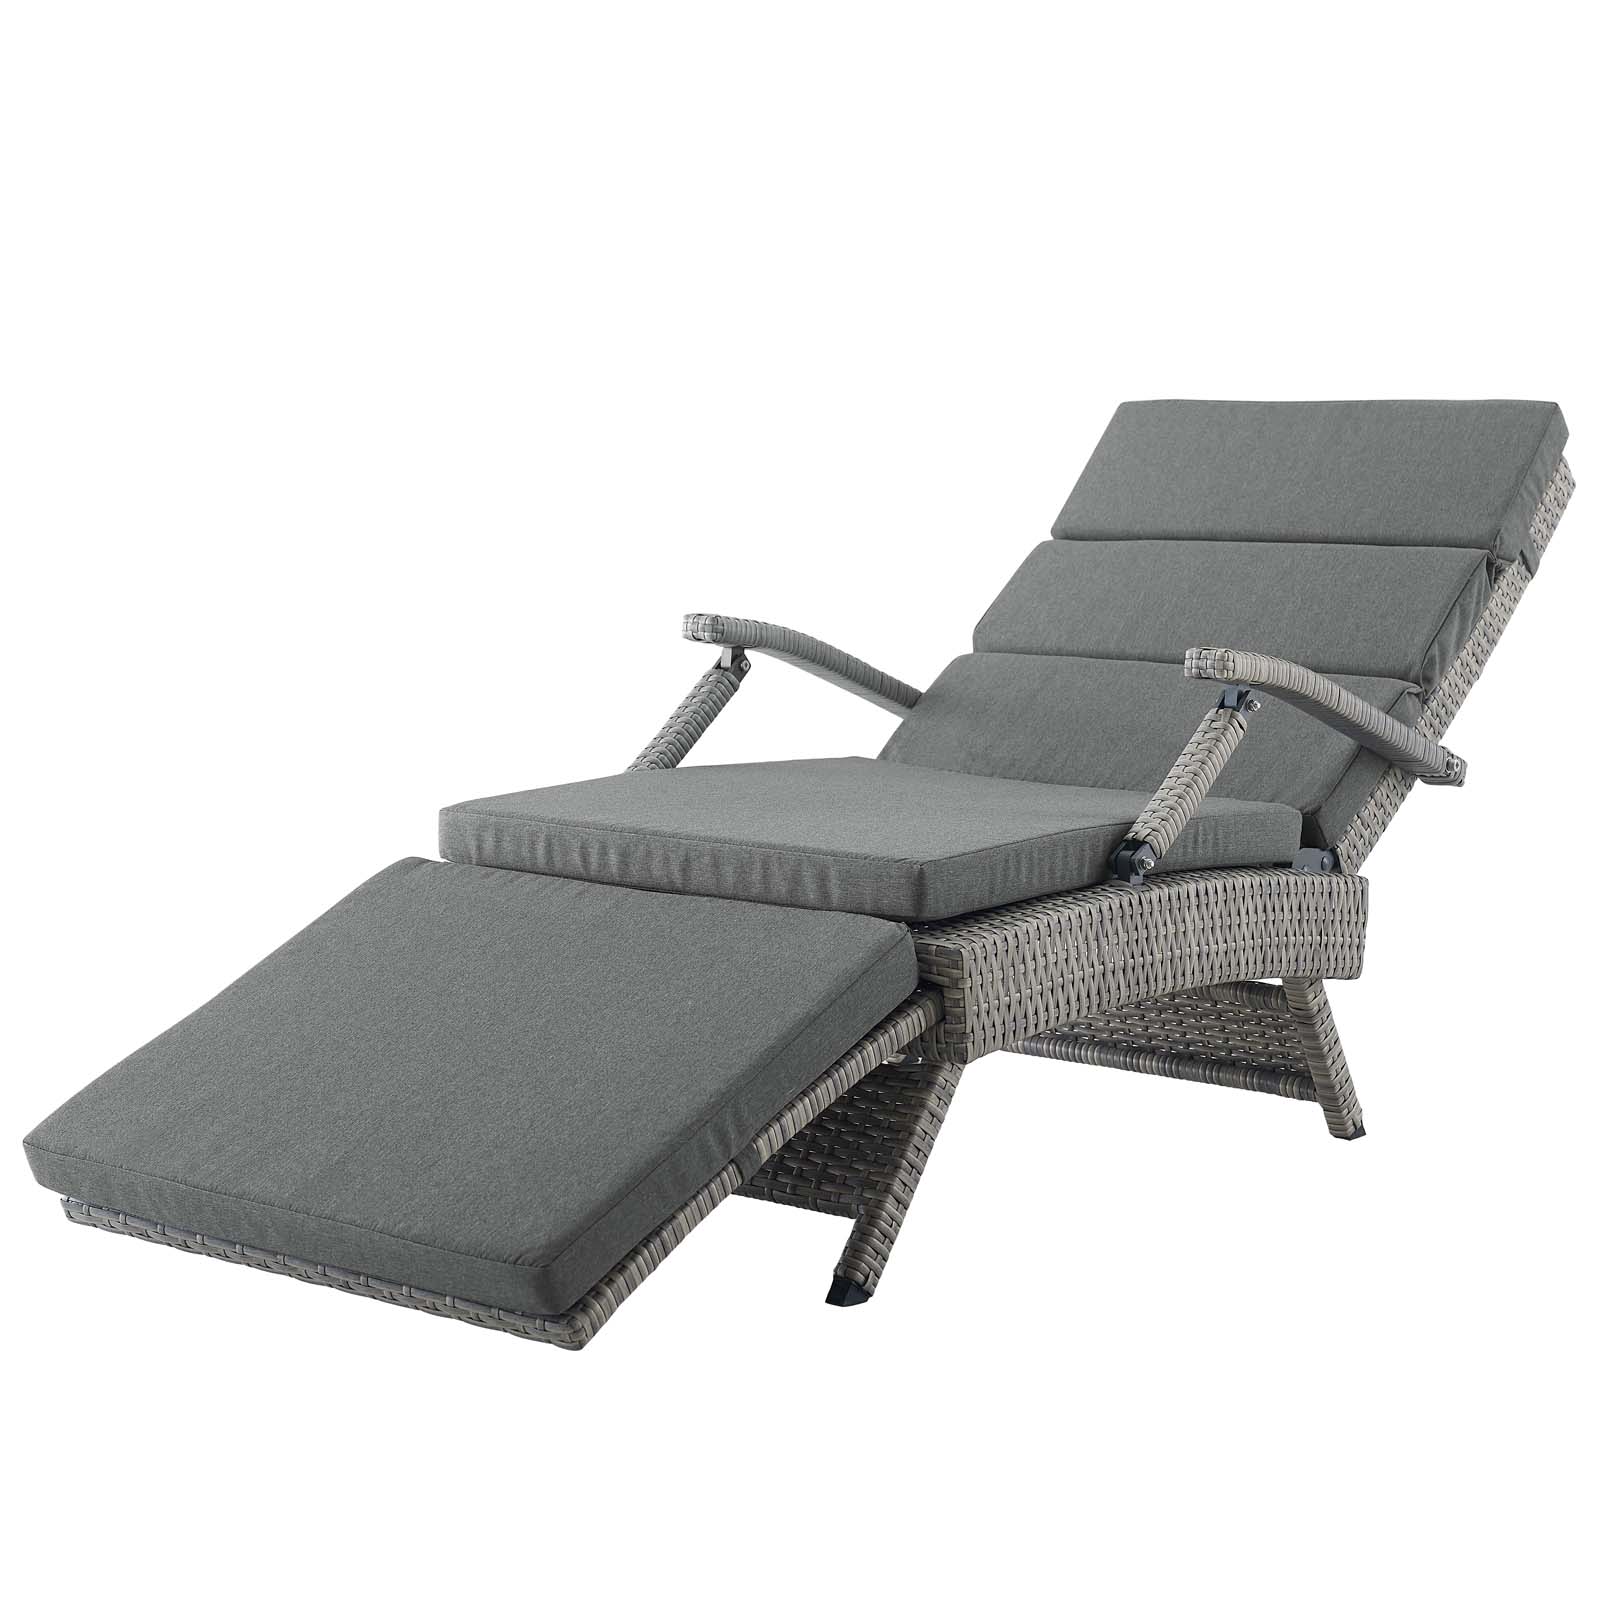 Modern Contemporary Urban Design Outdoor Patio Balcony Garden Furniture Lounge Chair Chaise, Rattan Wicker, Dark Grey Gray - image 1 of 8